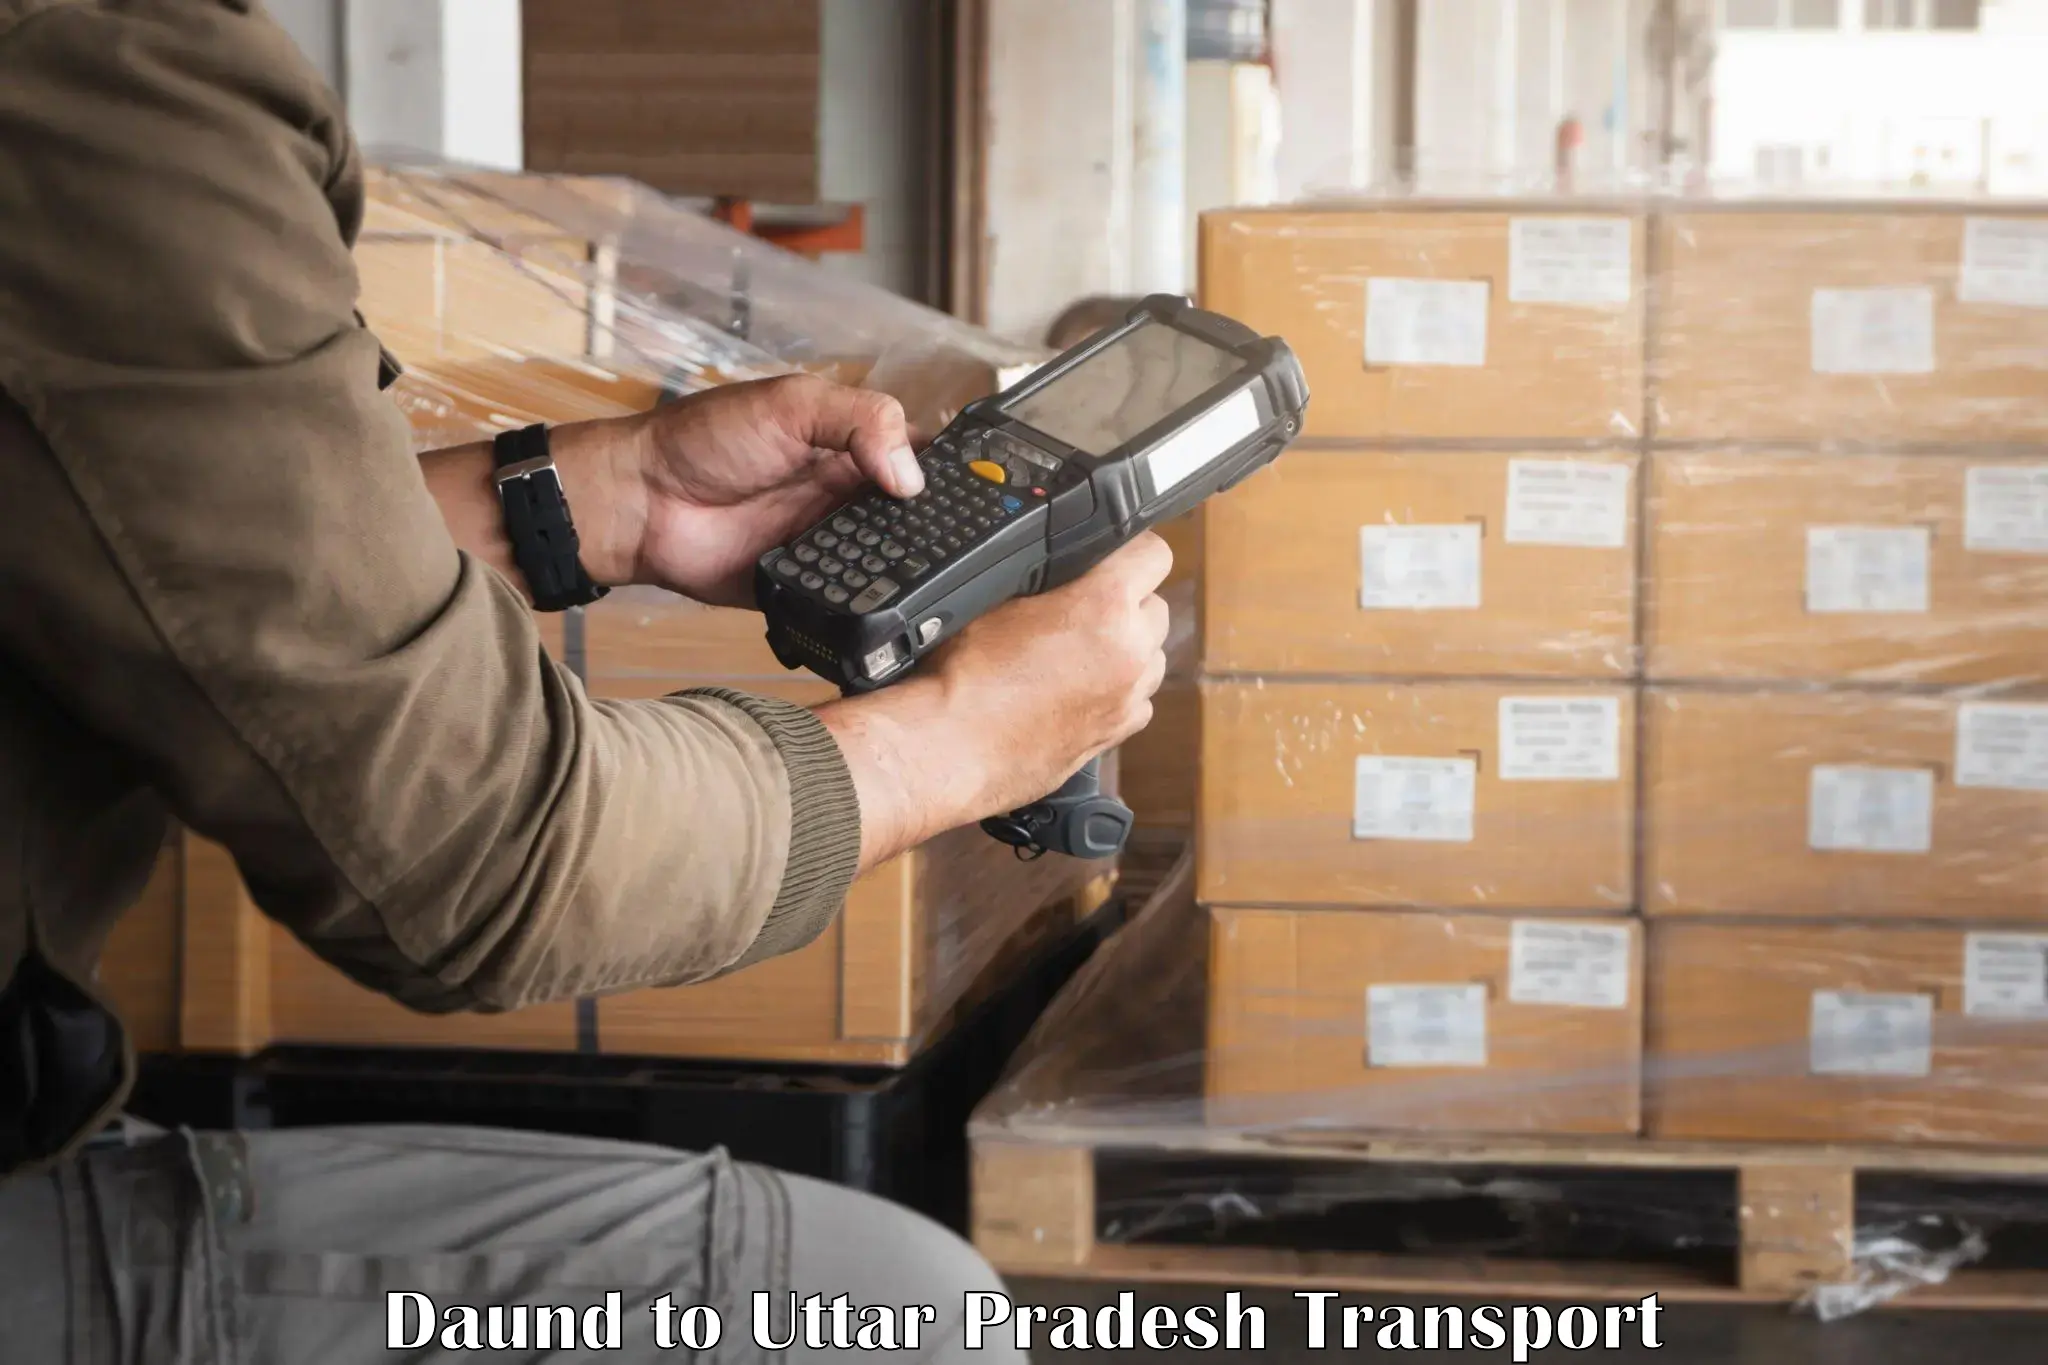 Delivery service Daund to Dadri